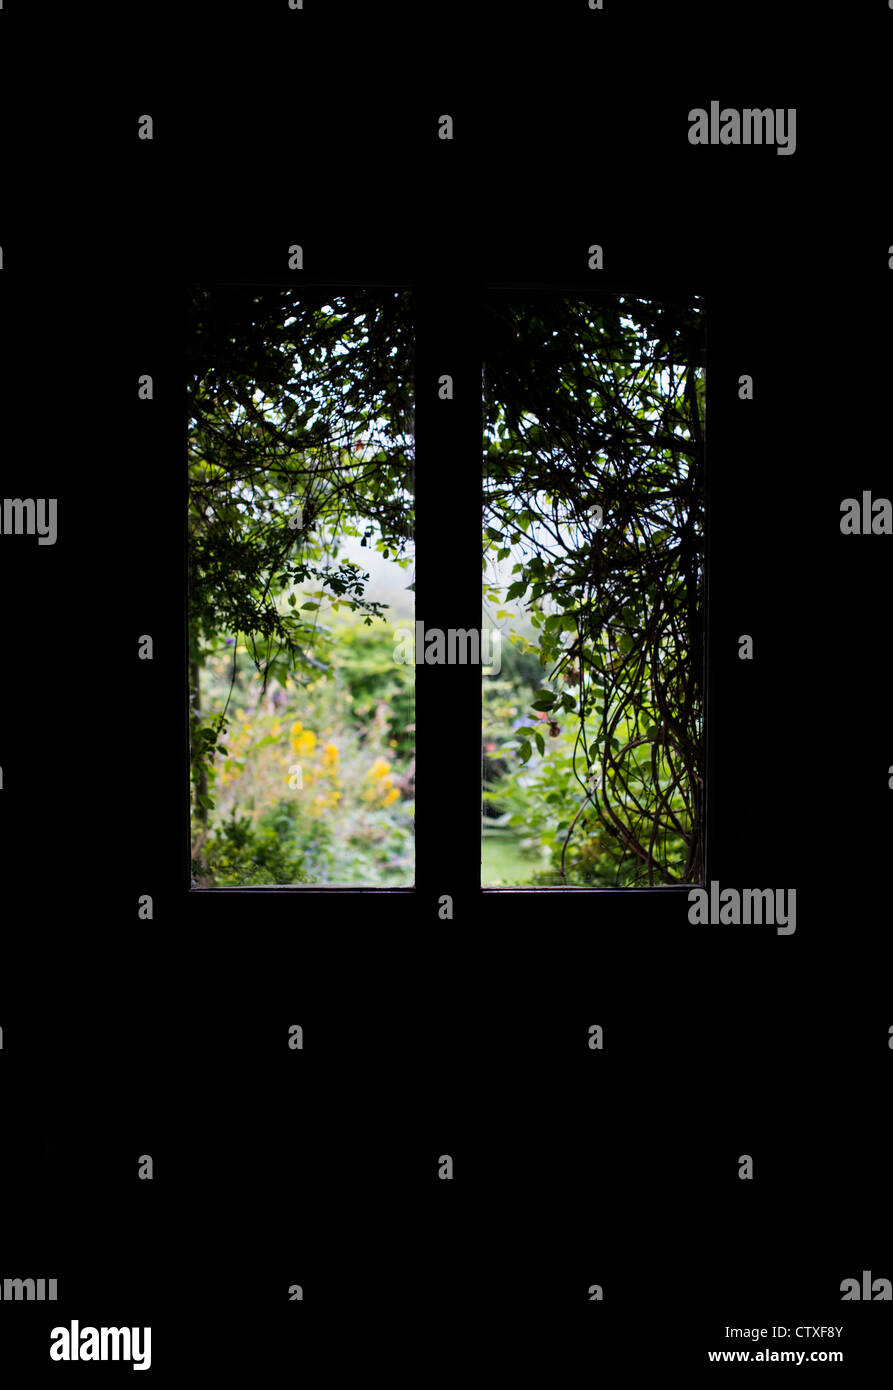 Overgrown garden view through Glass windows in a front door. Silhouette Stock Photo